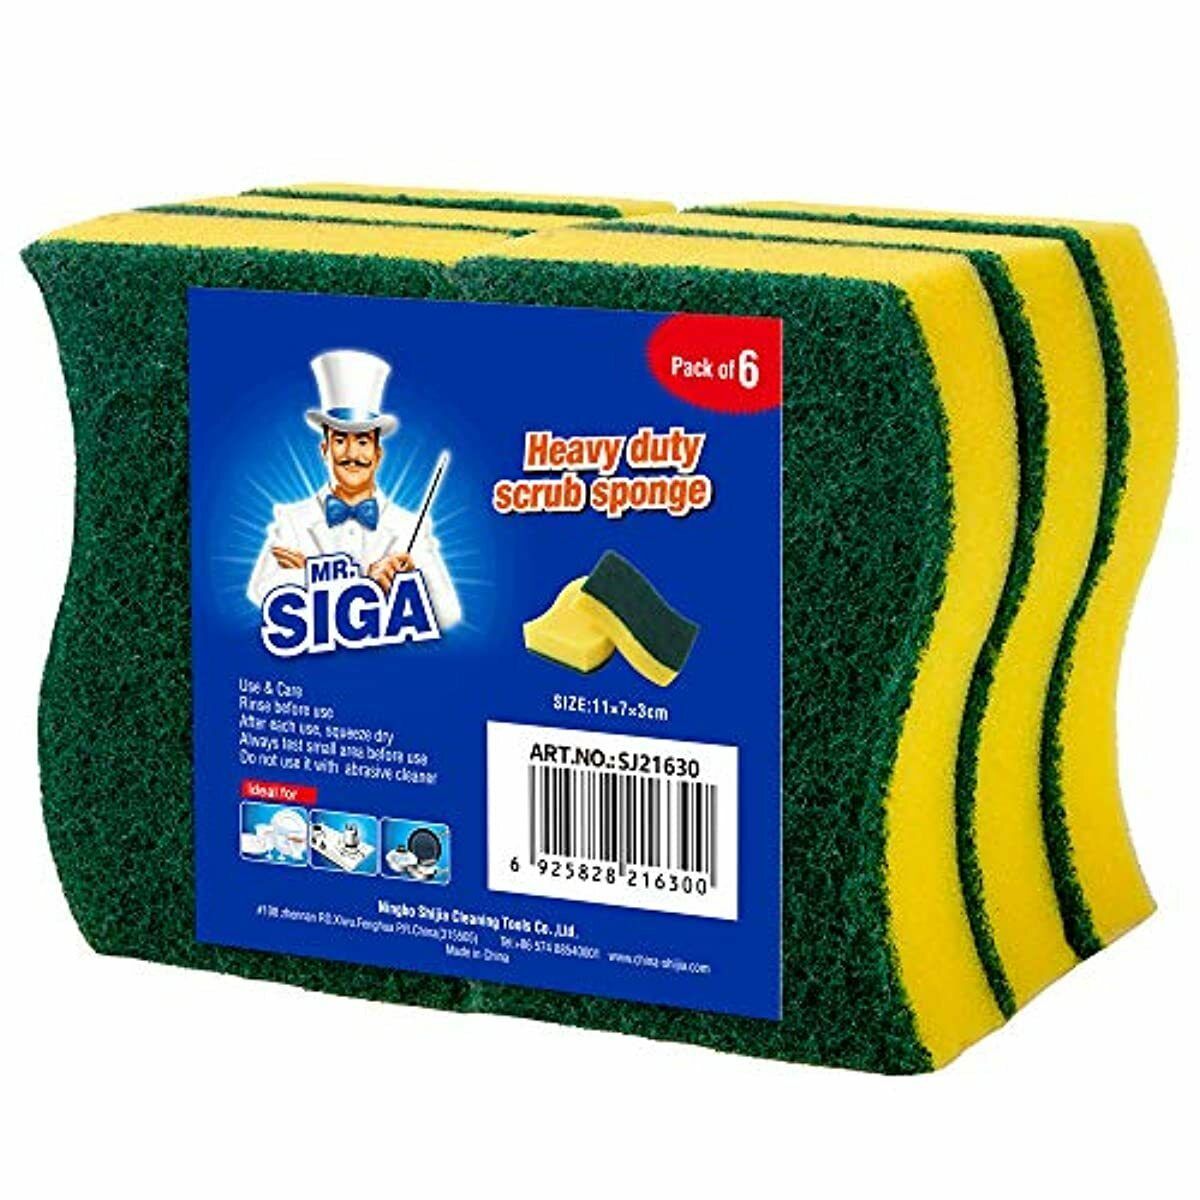 MR.SIGA Heavy Duty Scrub Sponge 6 Pack For kitchen, 4.3 x 2.8 x 1.2